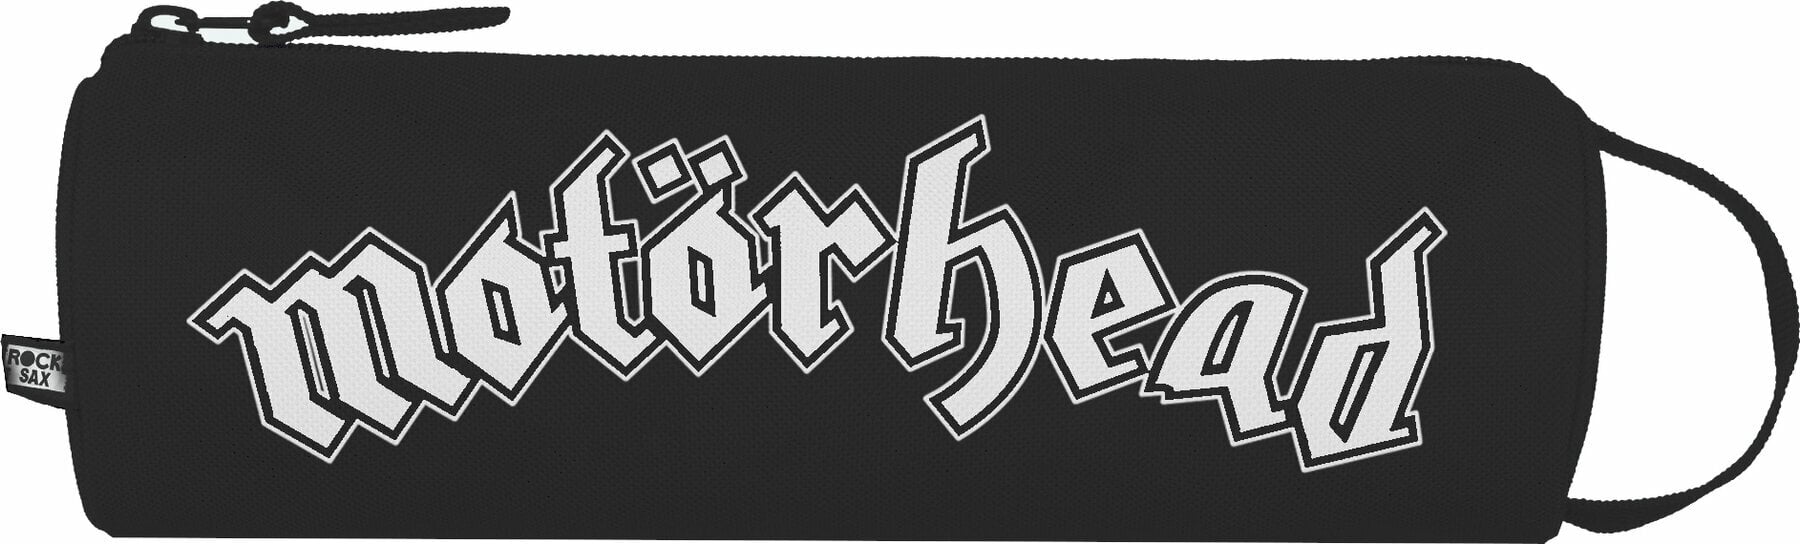 Penaali Motörhead Logo Penaali